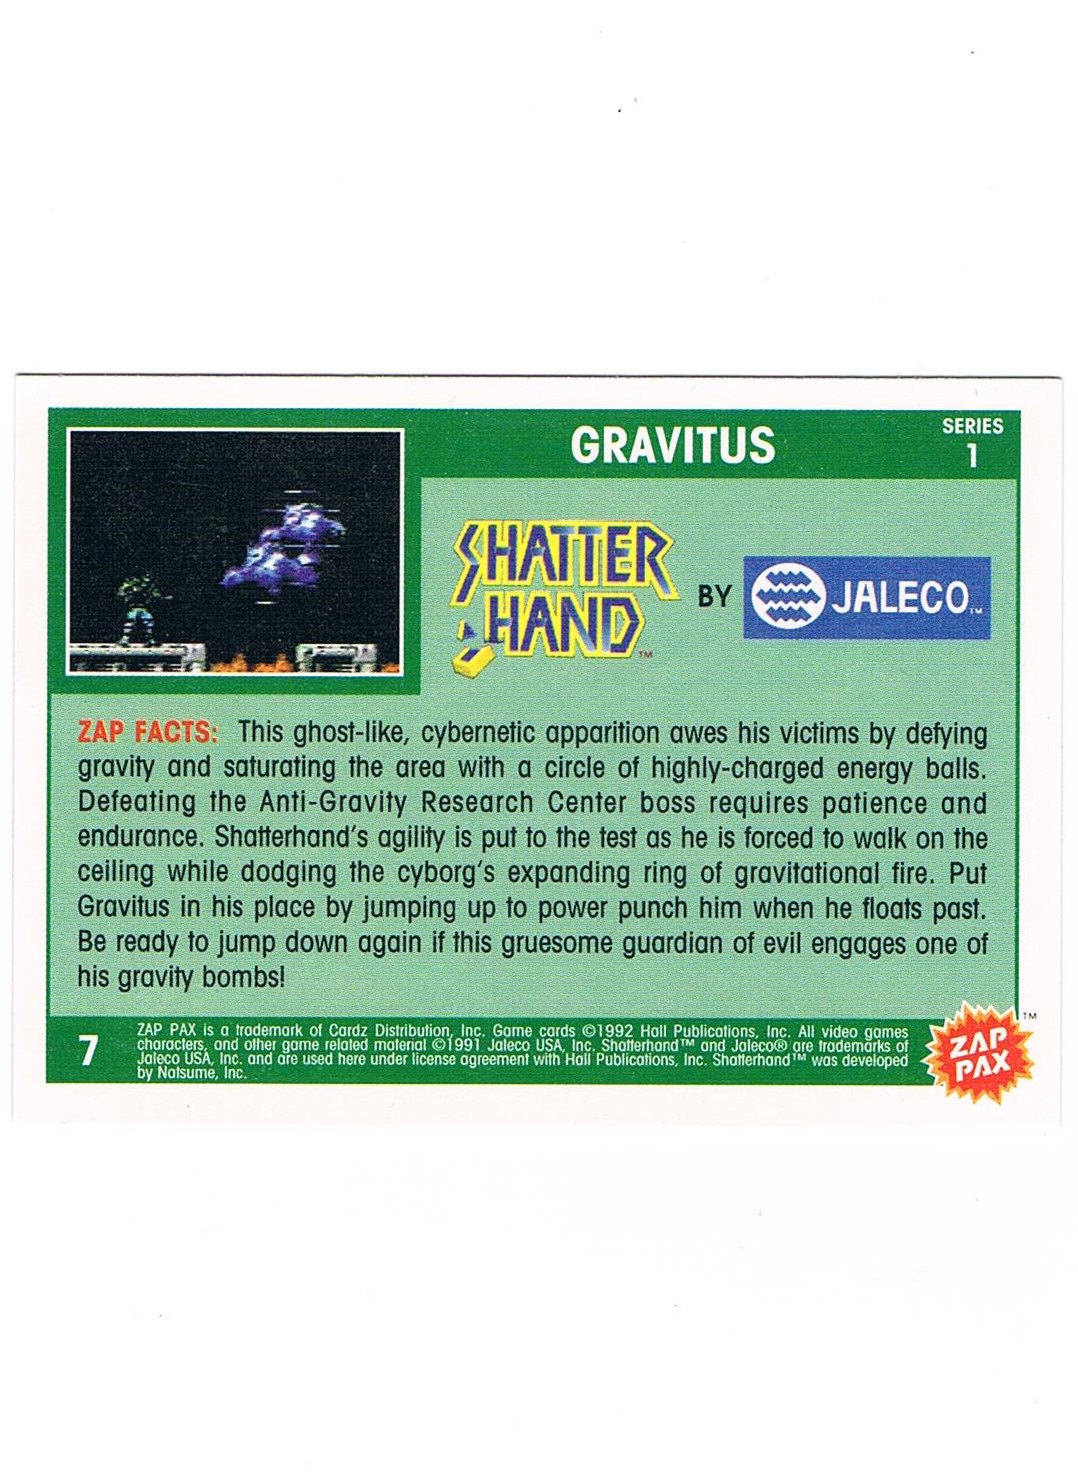 Zap Pax No. 7 - Shatter Hand Gravitus 2